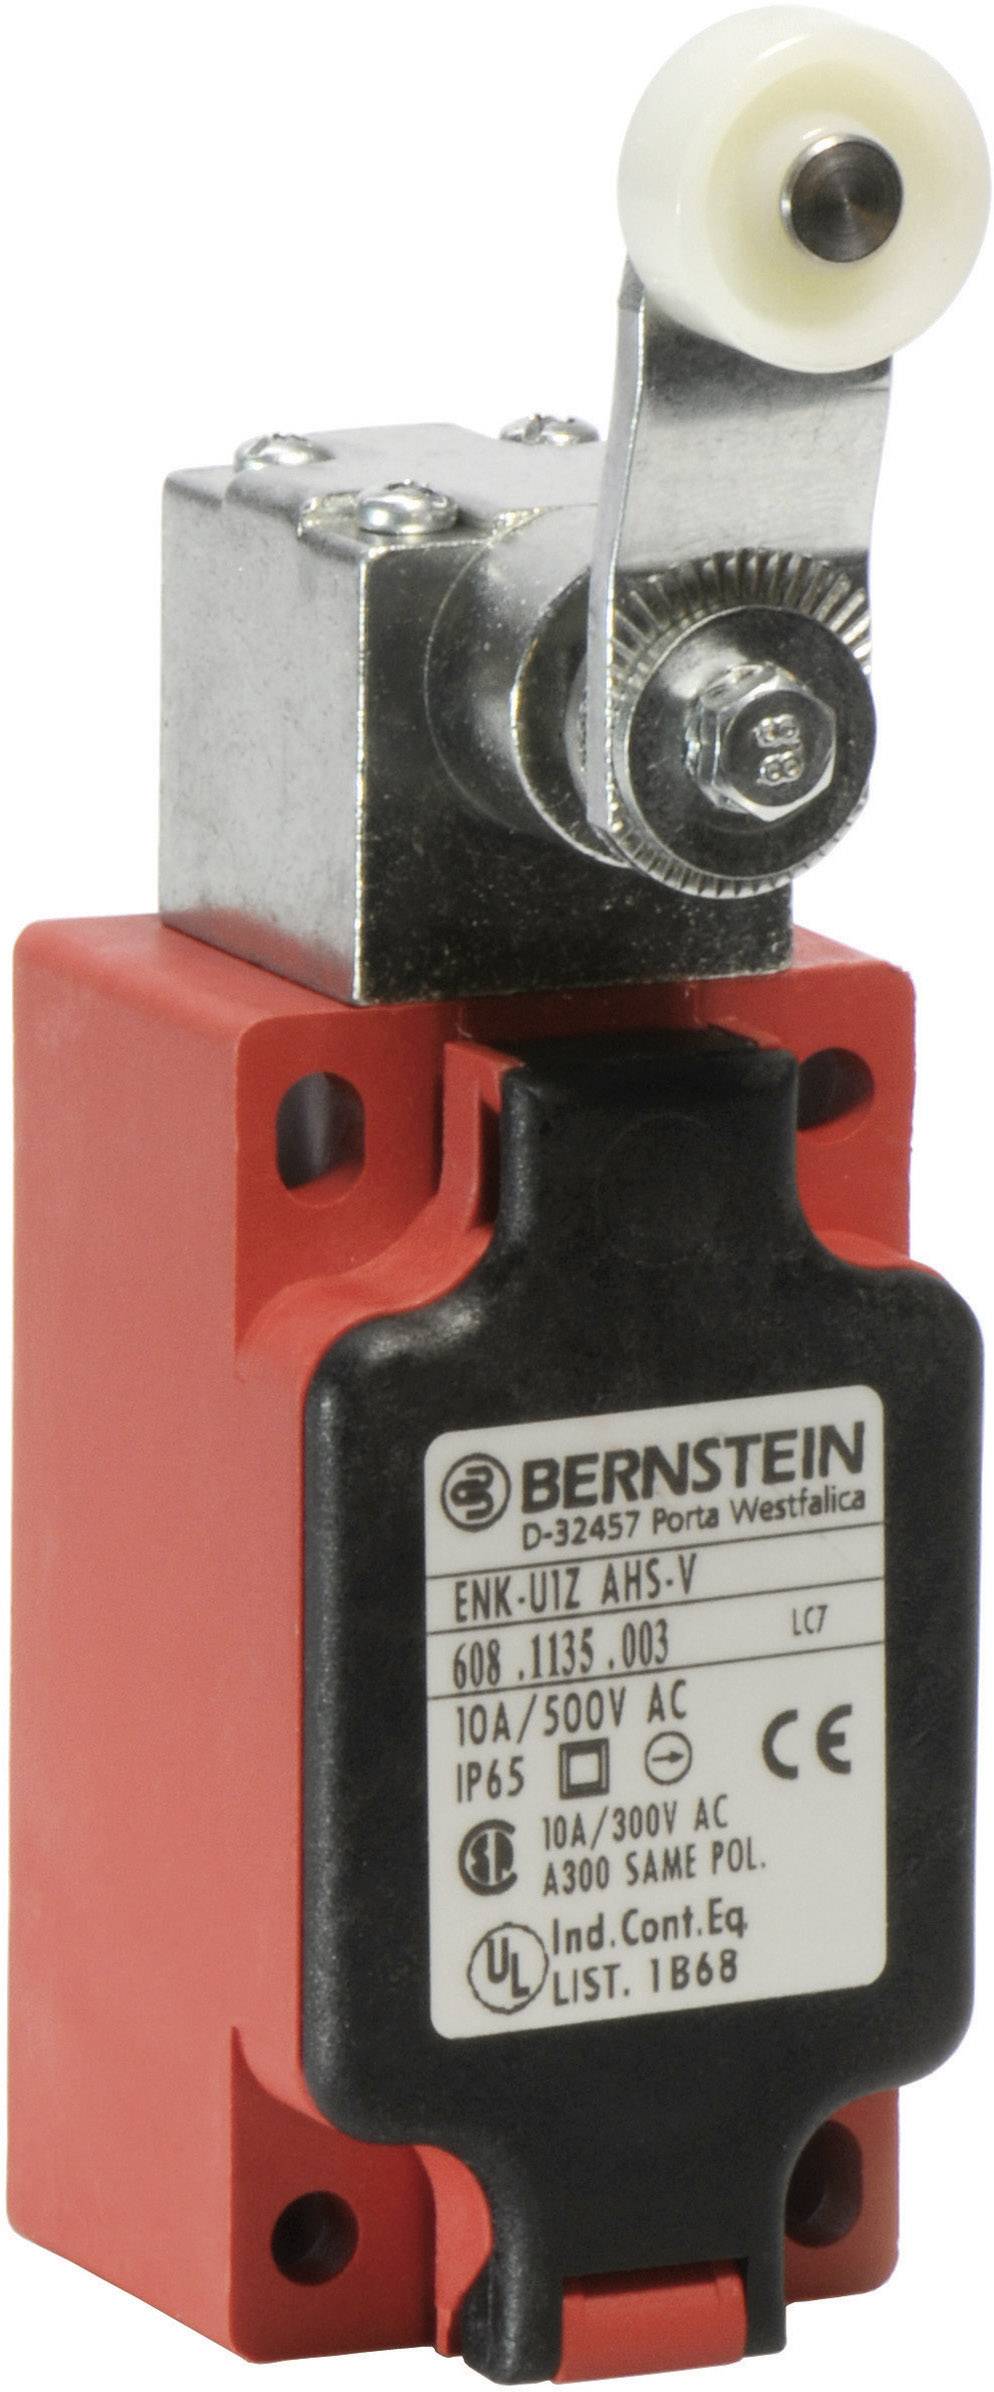 Bernstein d 32457 10a/500v ac limit Switch 